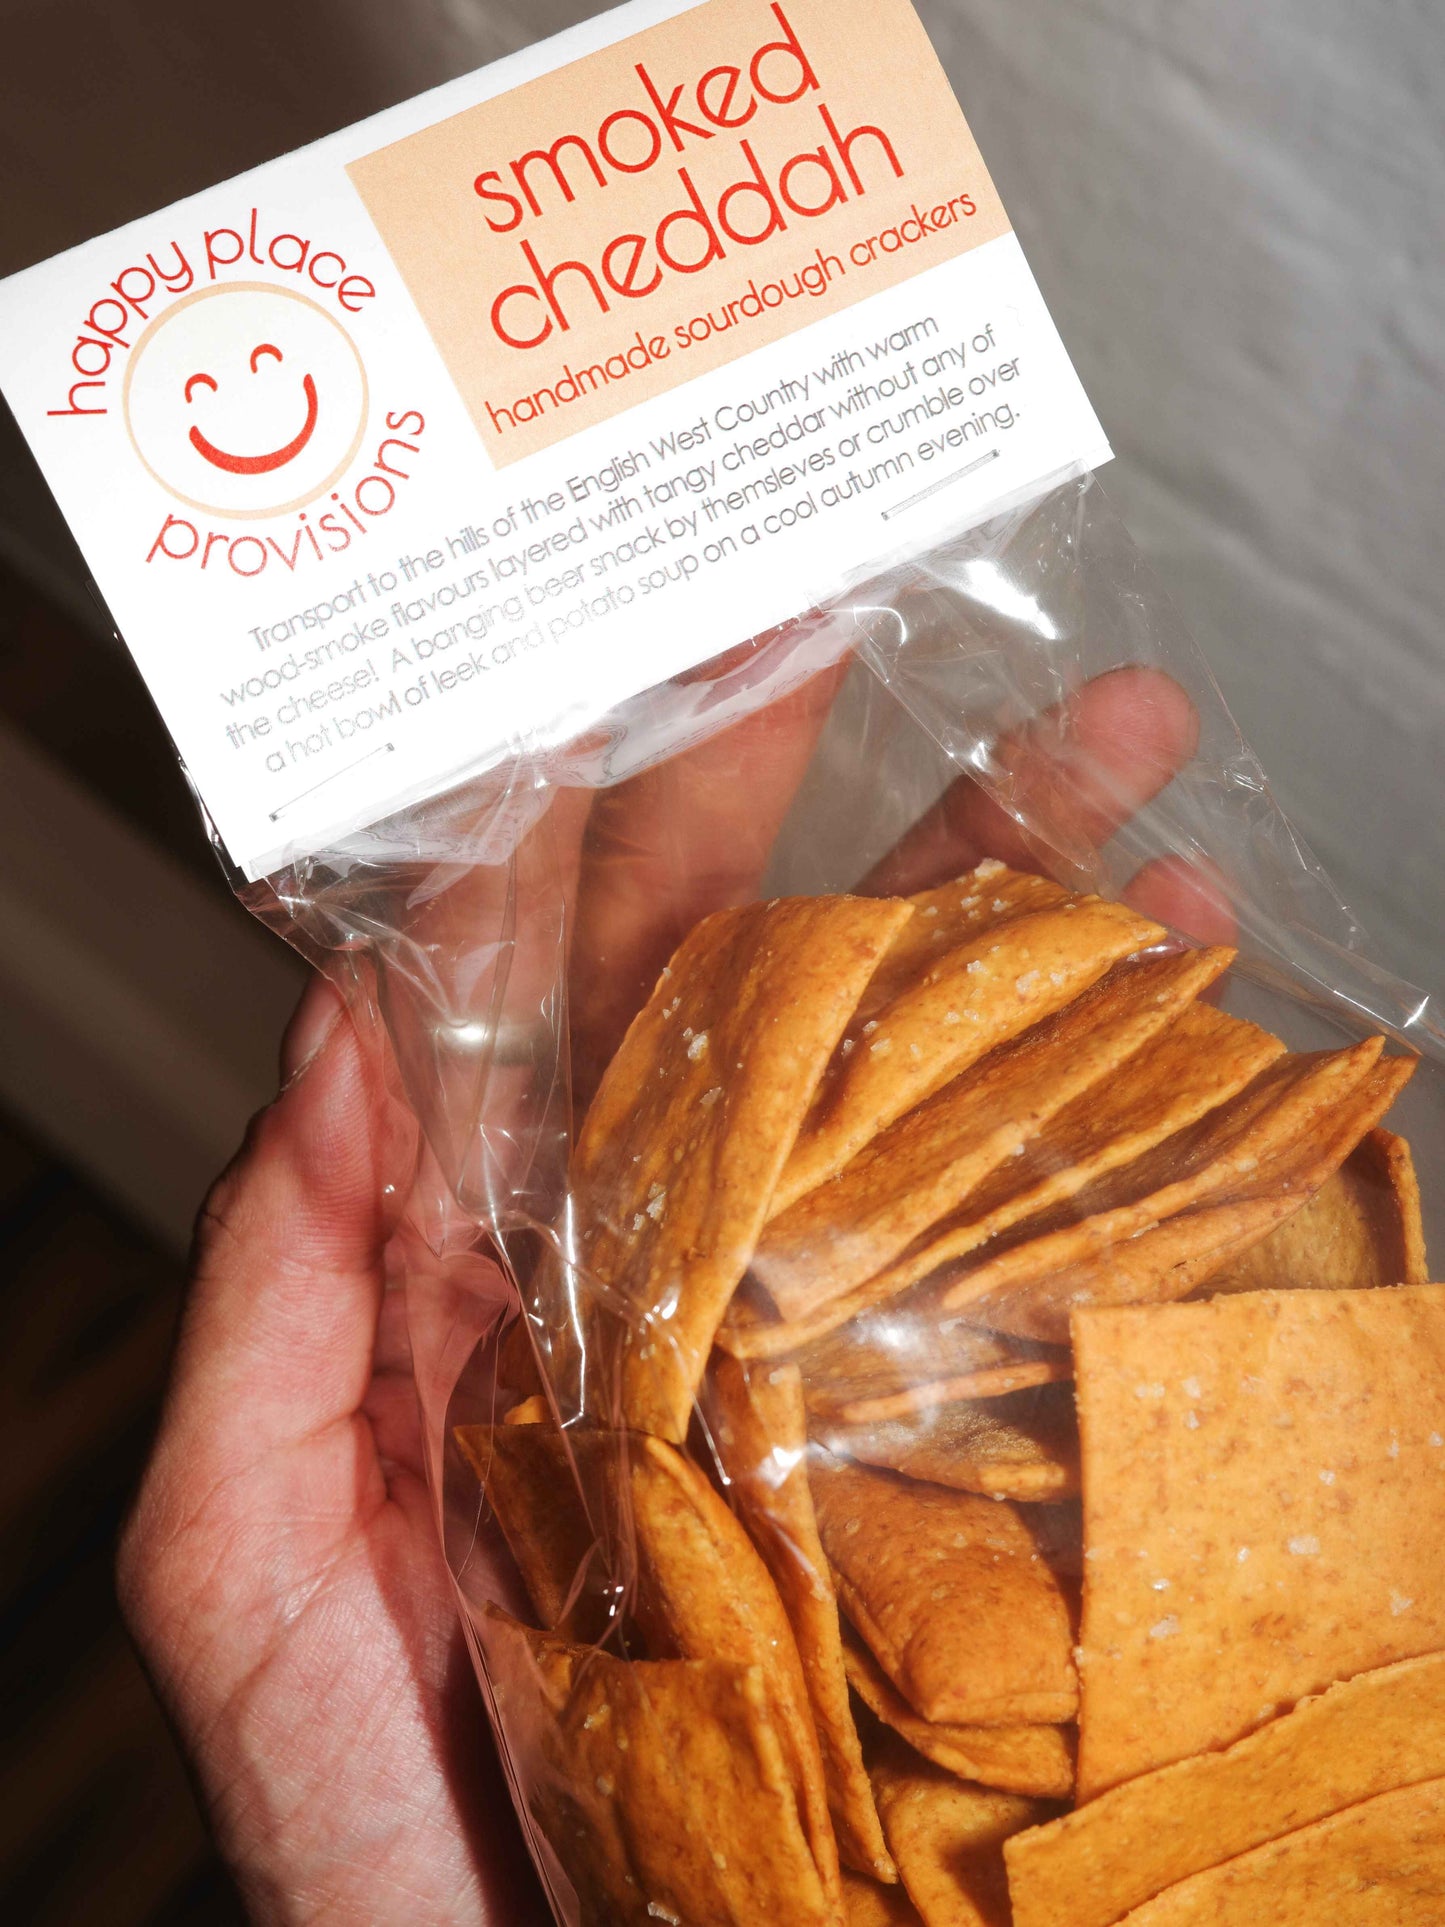 Smoked Cheddah Handmade Sourdough Crackers-Sharing Pack